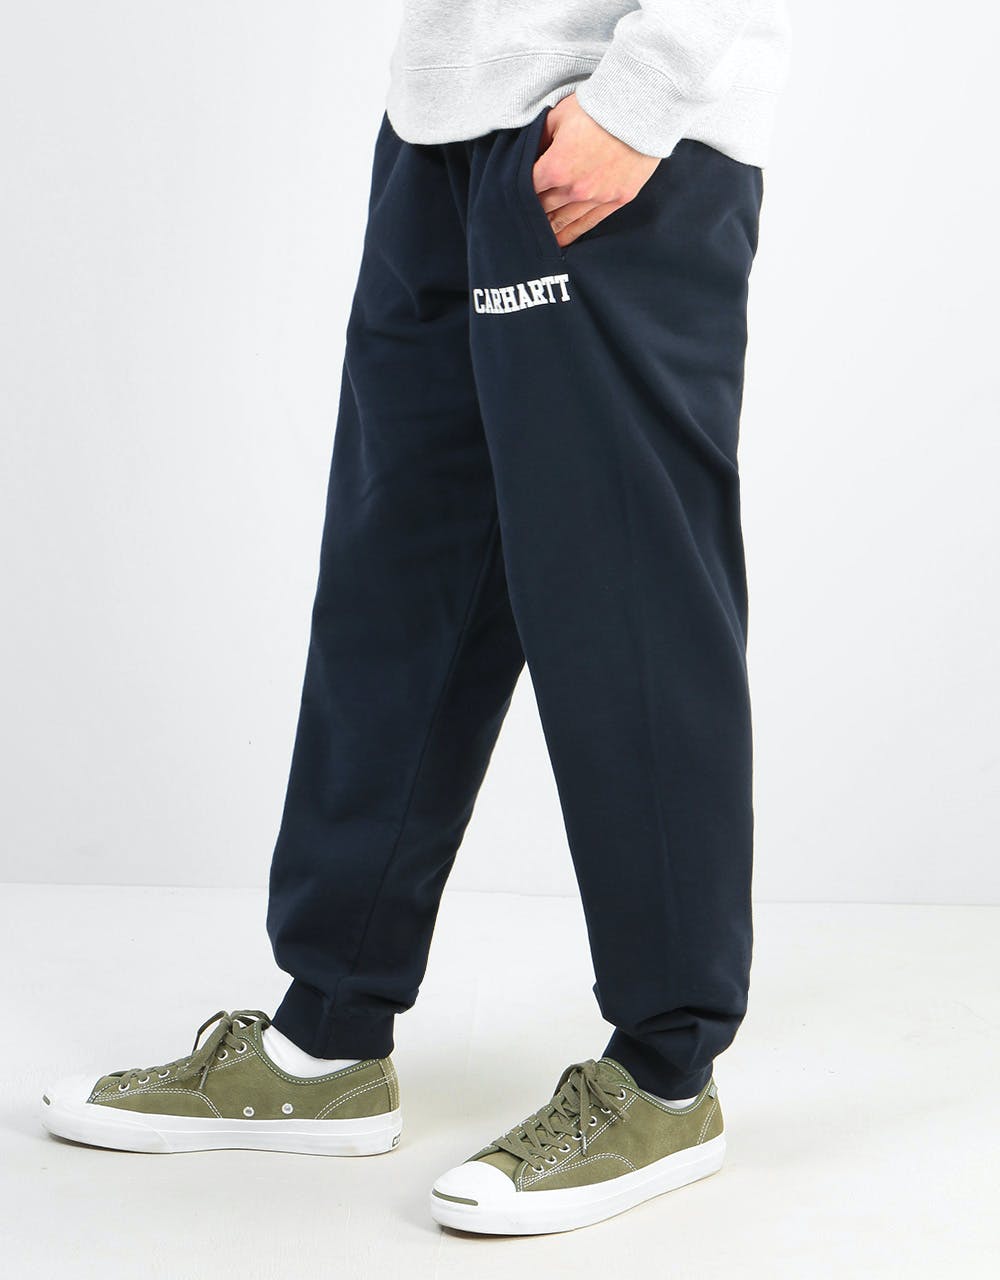 Carhartt WIP College Sweatpants - Dark Navy/White